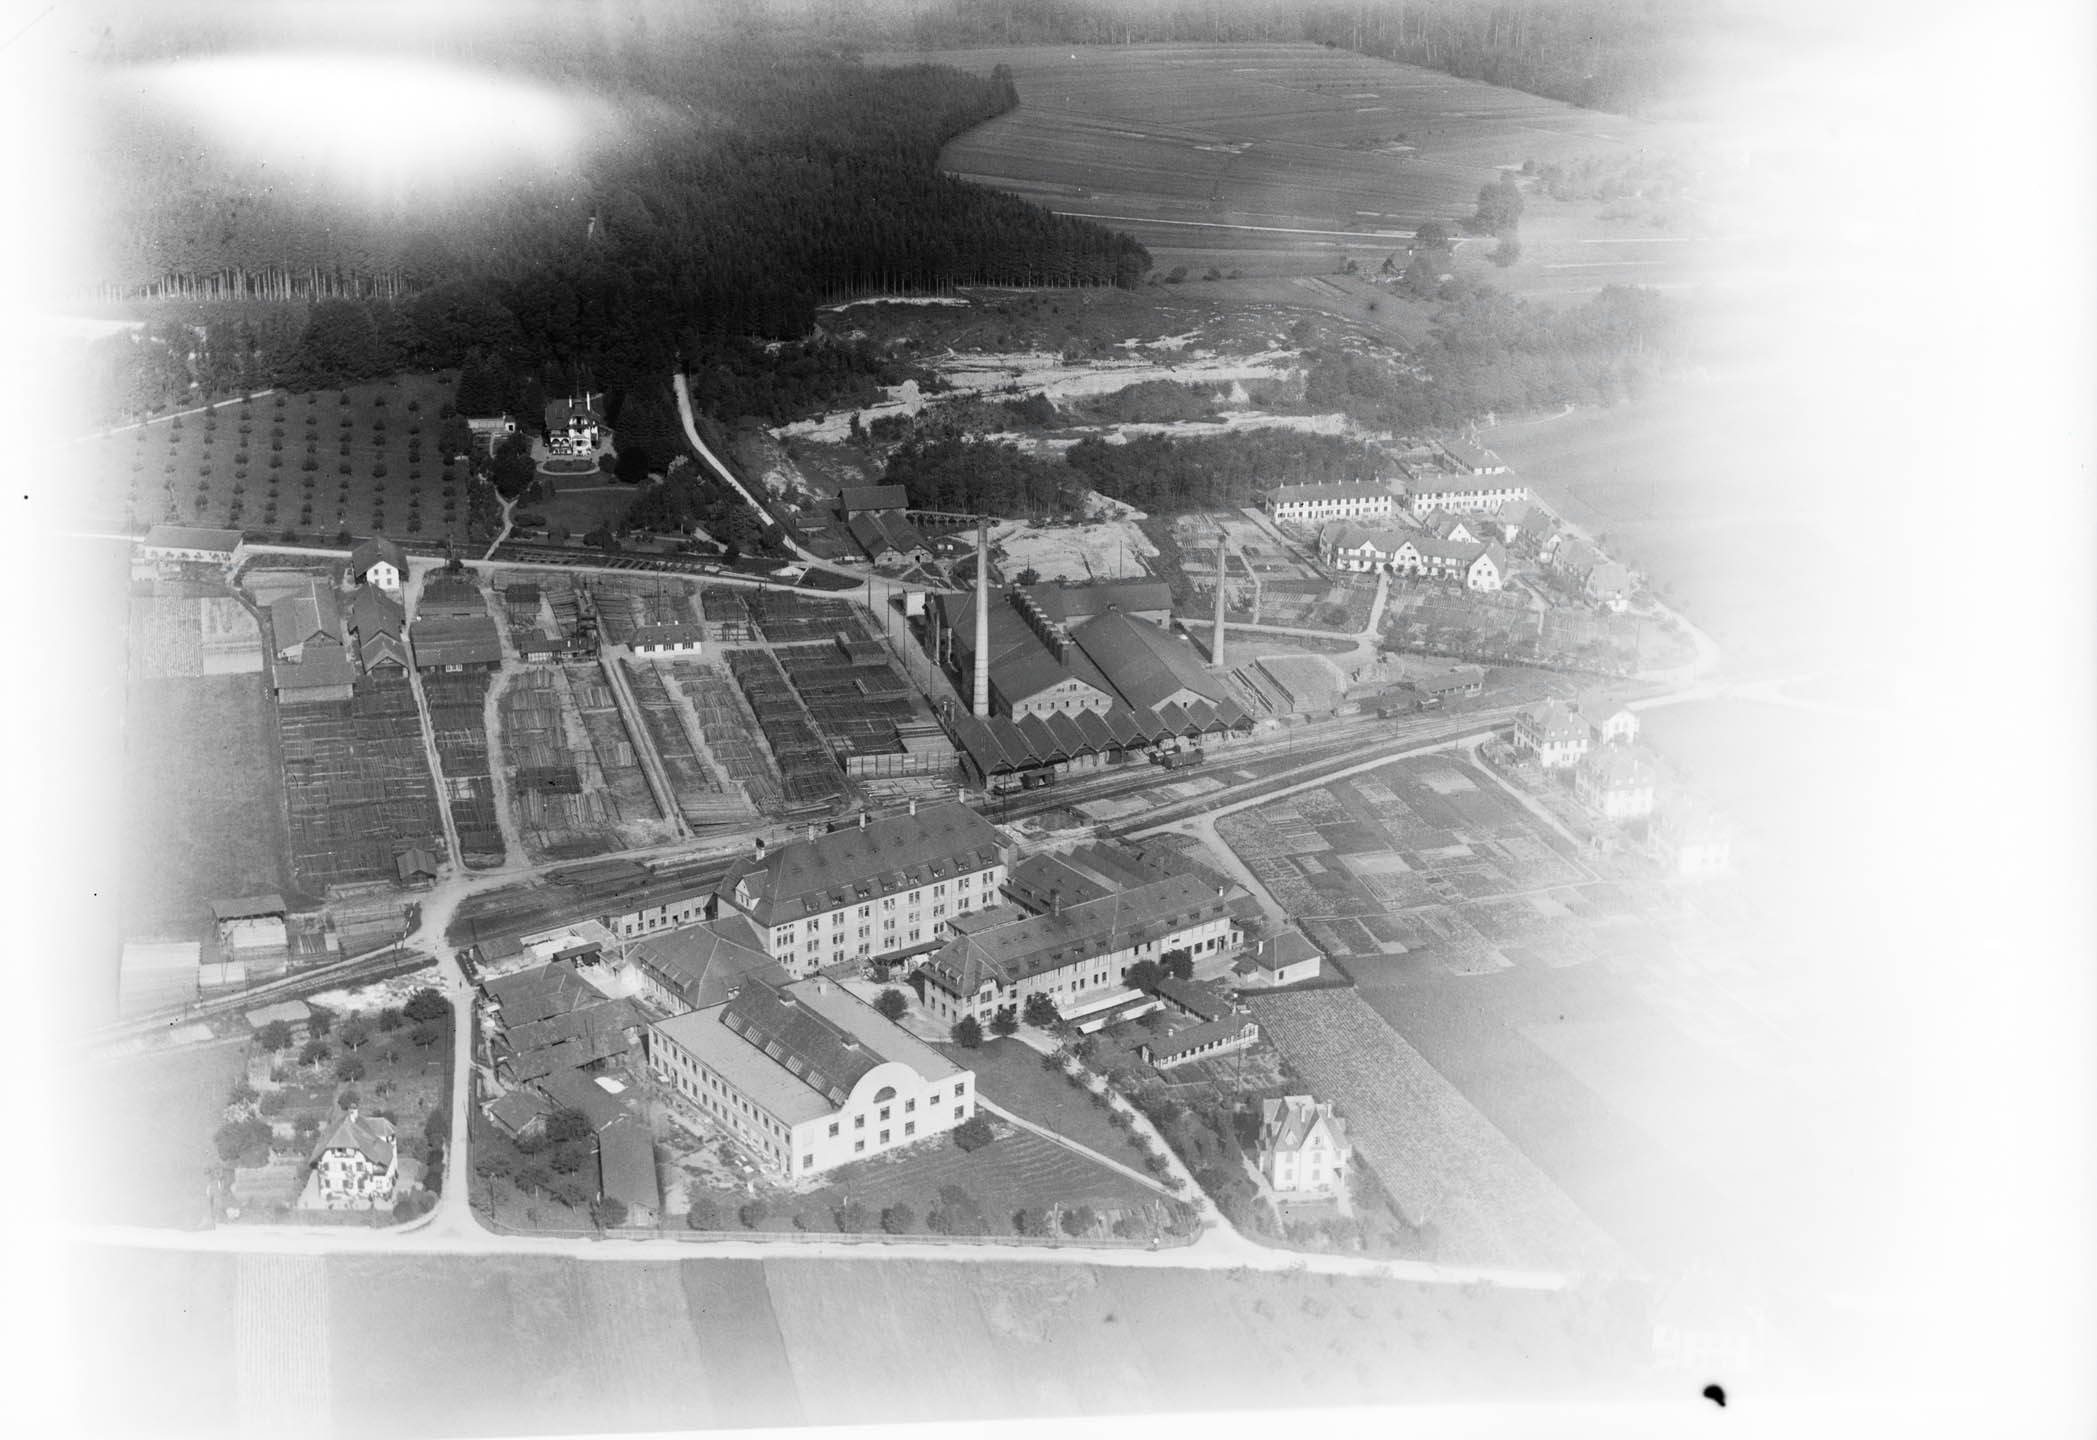 Porzellanfabrik Langenthal, 1918-1937